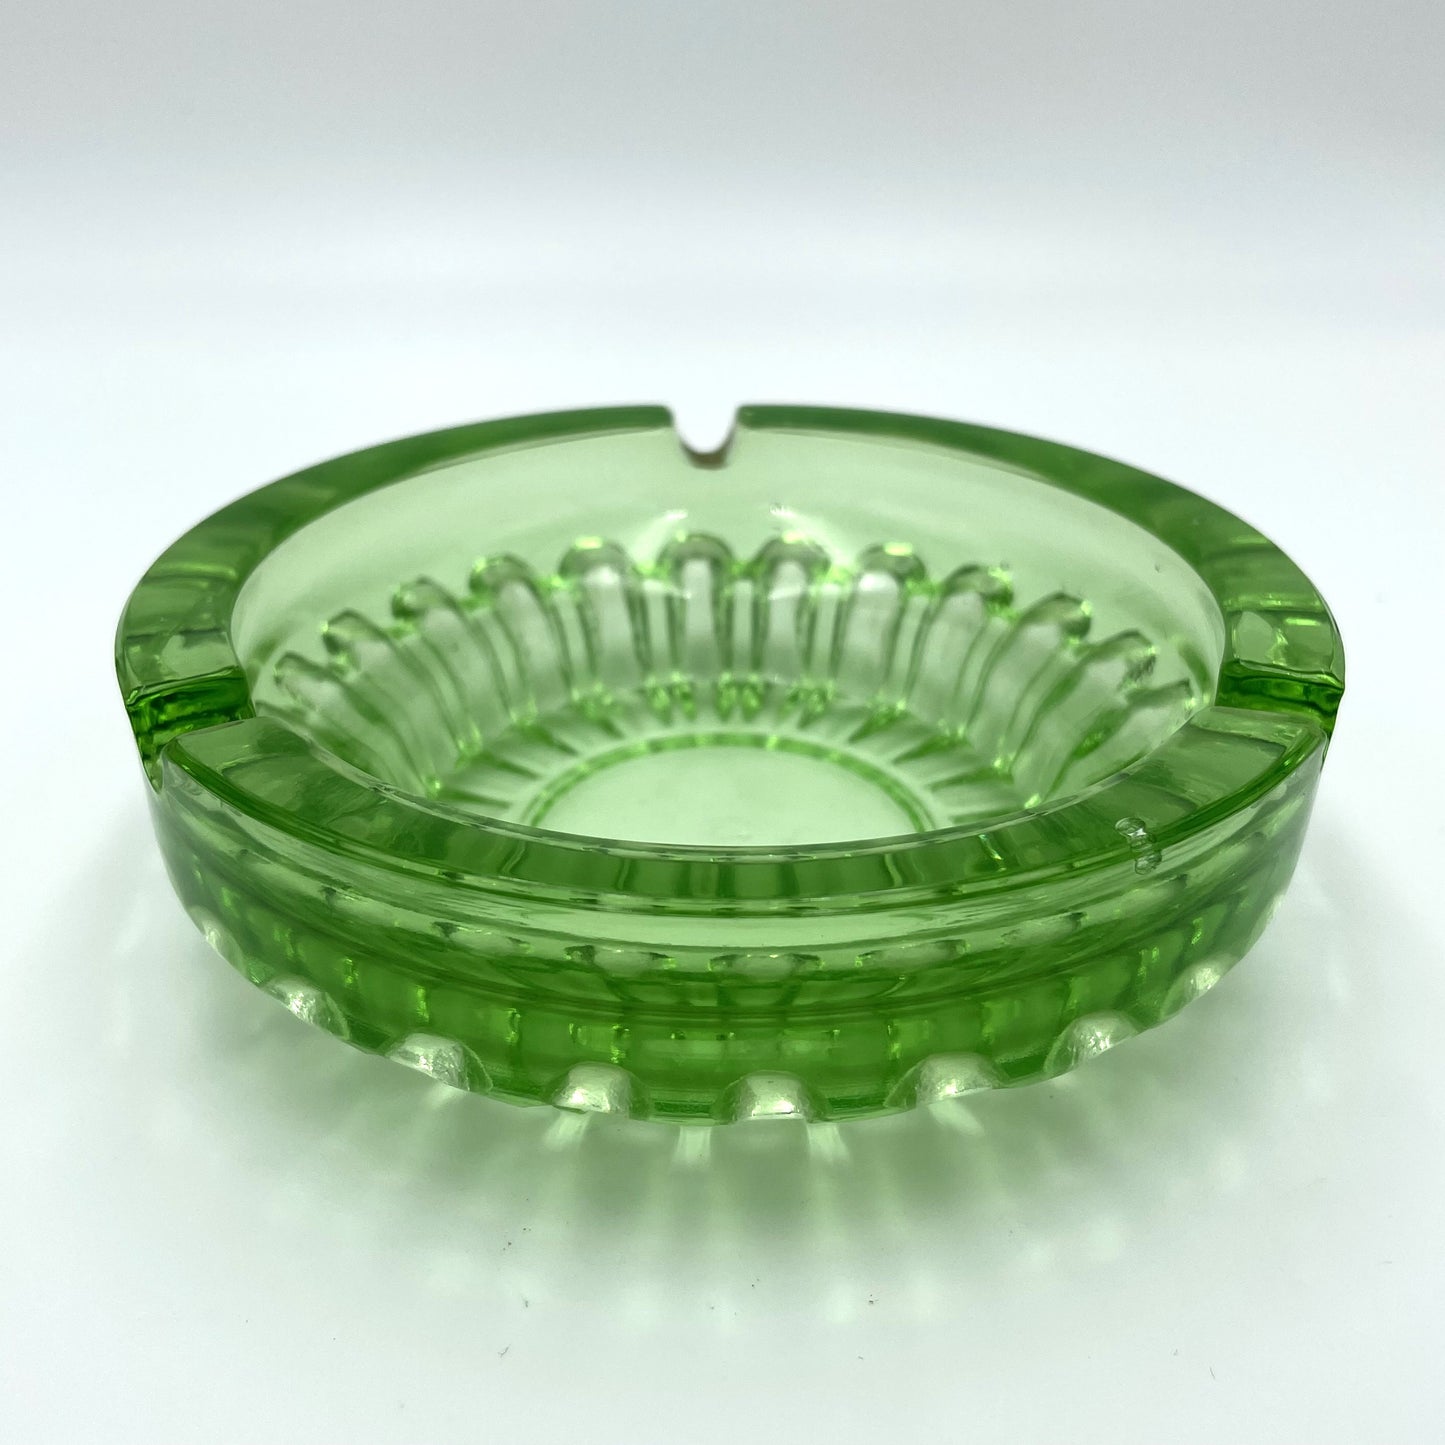 Green Depression Glass Ashtray - 13cm